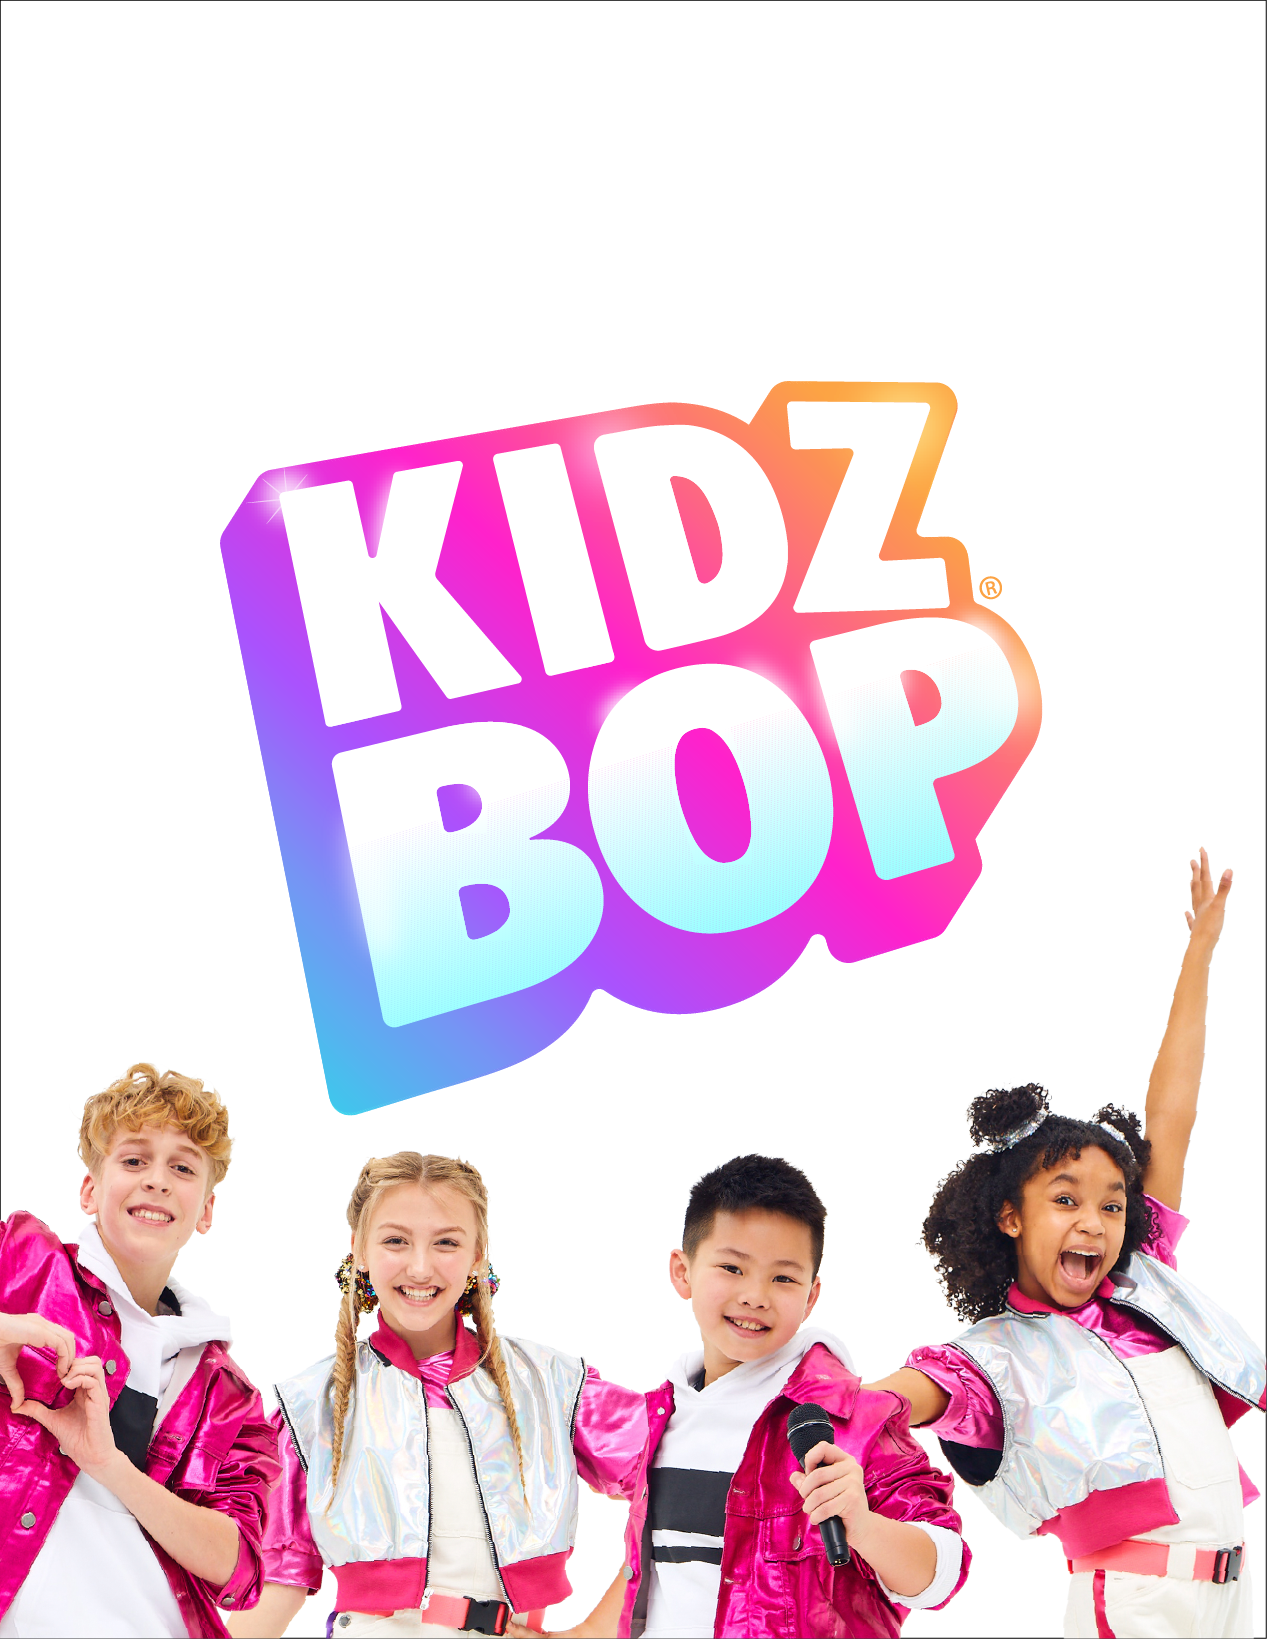 The KIDZ BOP Kids